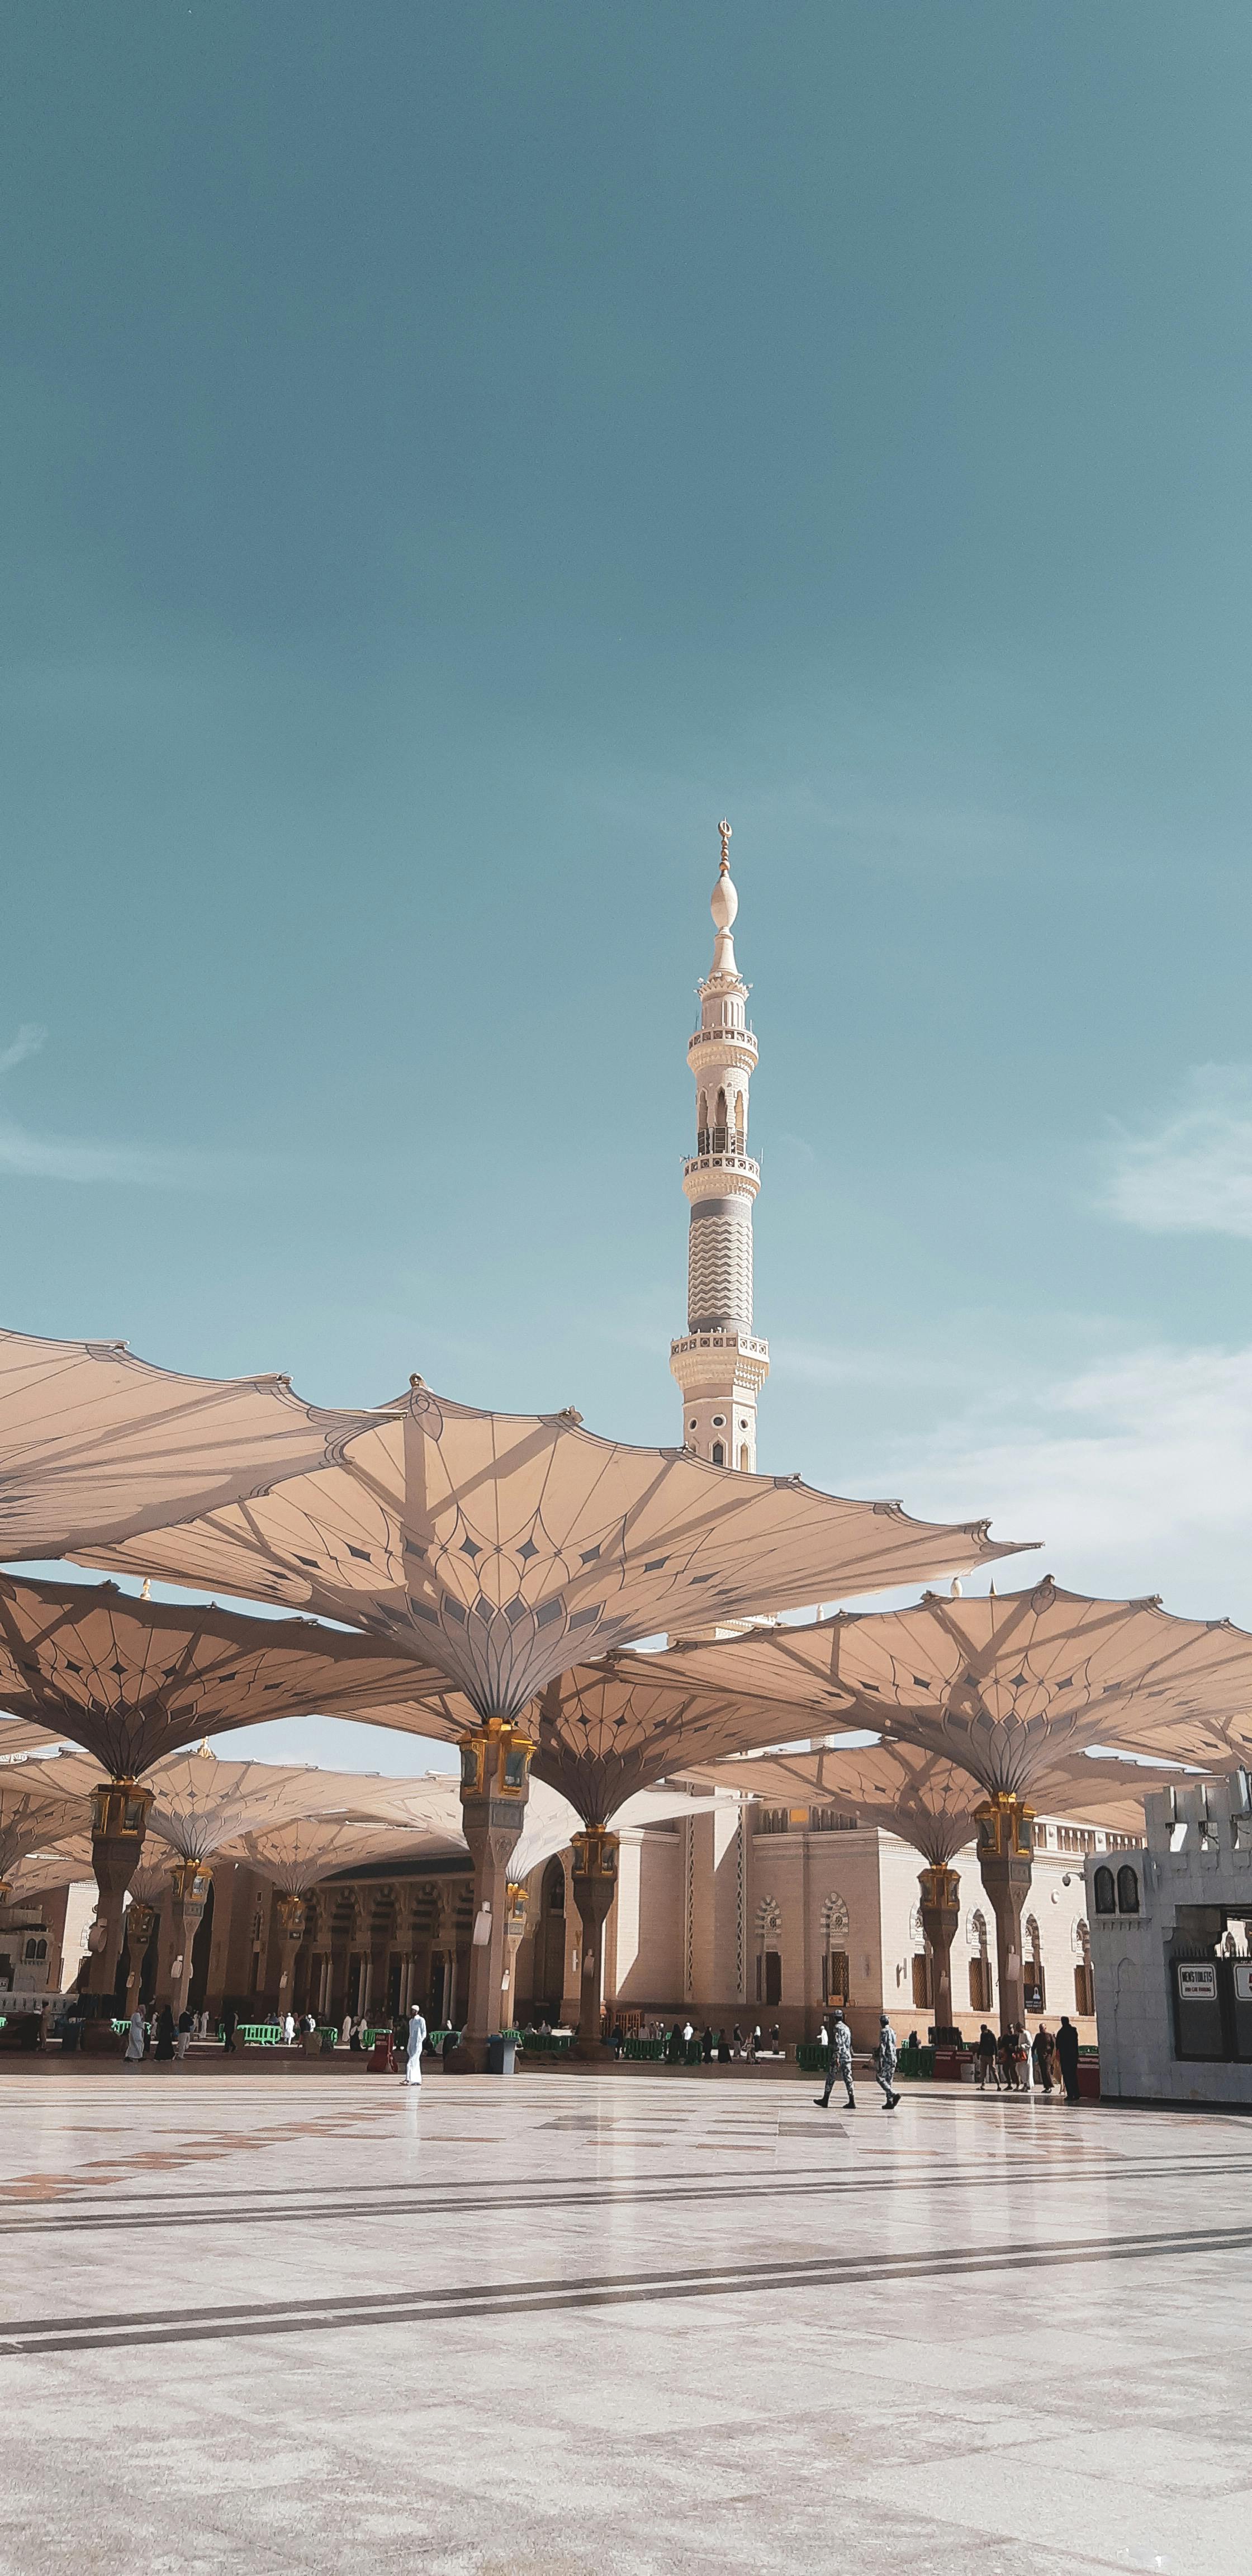 masjid-e-nabawi #prophet's mosque 🕌 ♥️ #madinah #prophet's land - YouTube